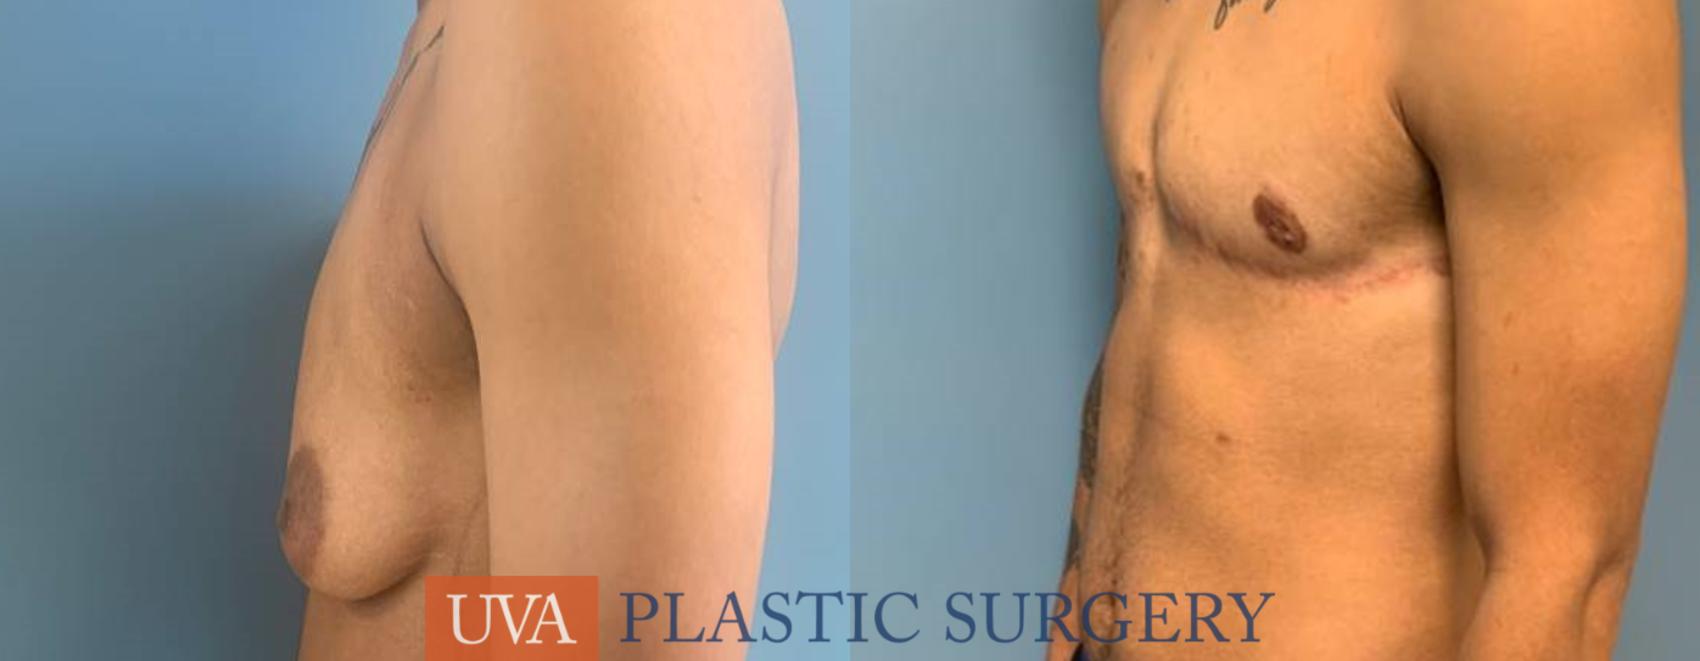 Chest Masculinization Case 247 Before & After Left Side | Richmond, Charlottesville & Roanoke, VA | University of Virginia Plastic Surgery